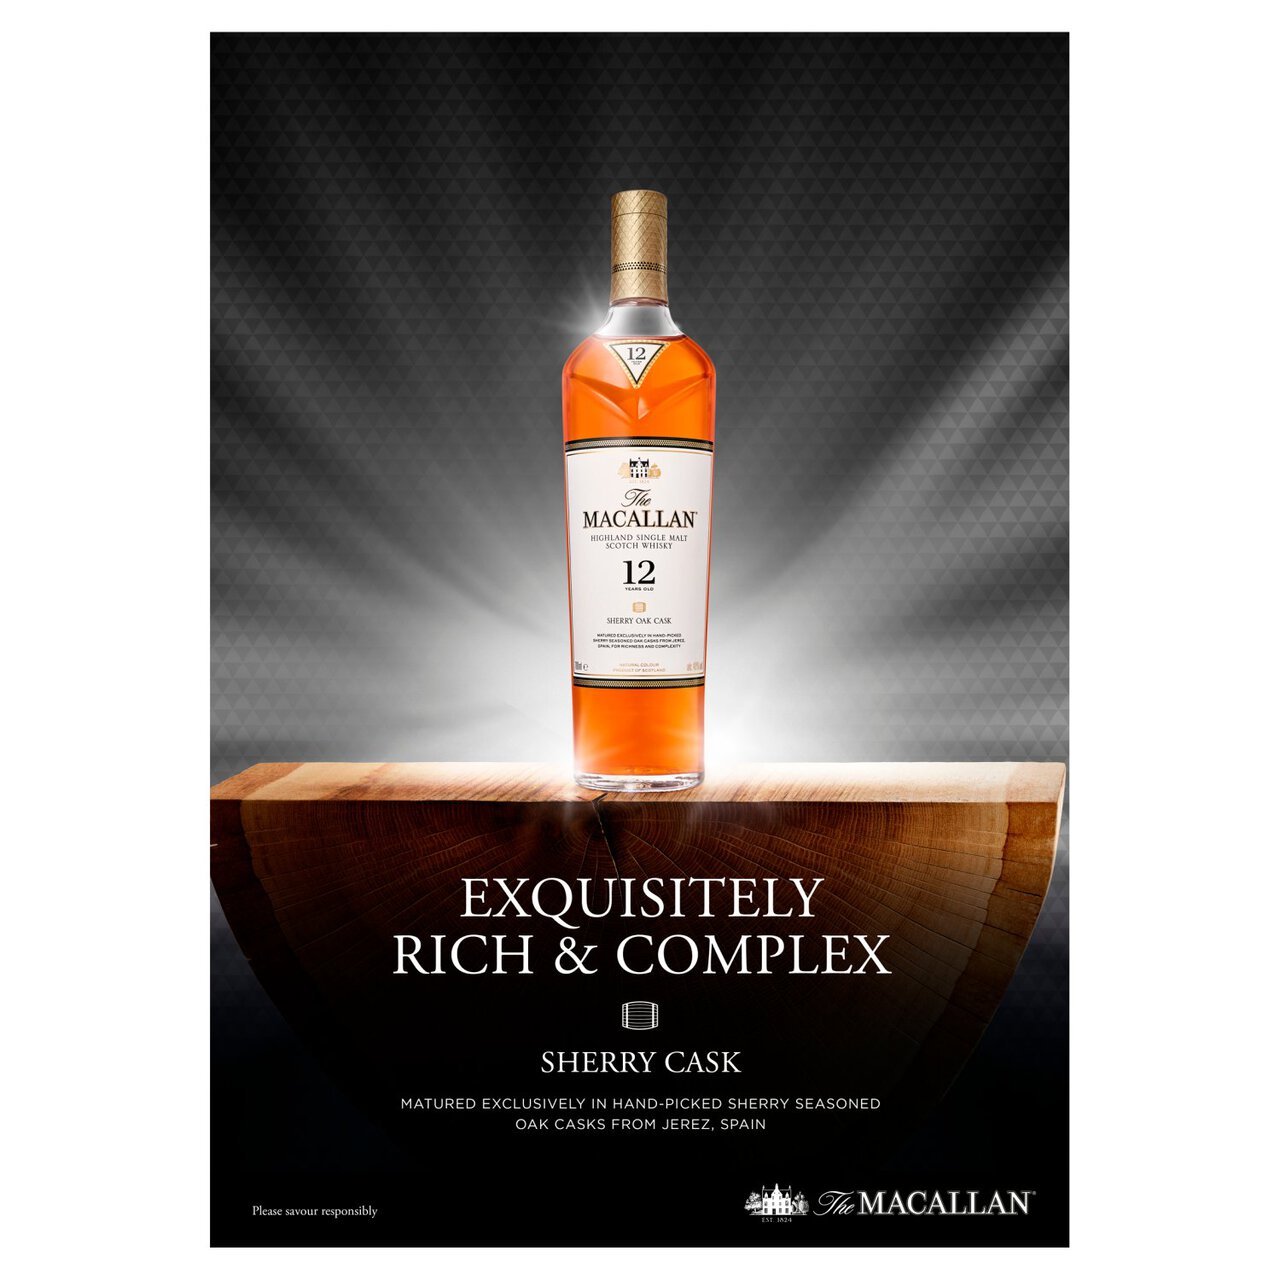 The Macallan 12 Year Old Sherry Oak Single Malt Scotch Whisky 70cl